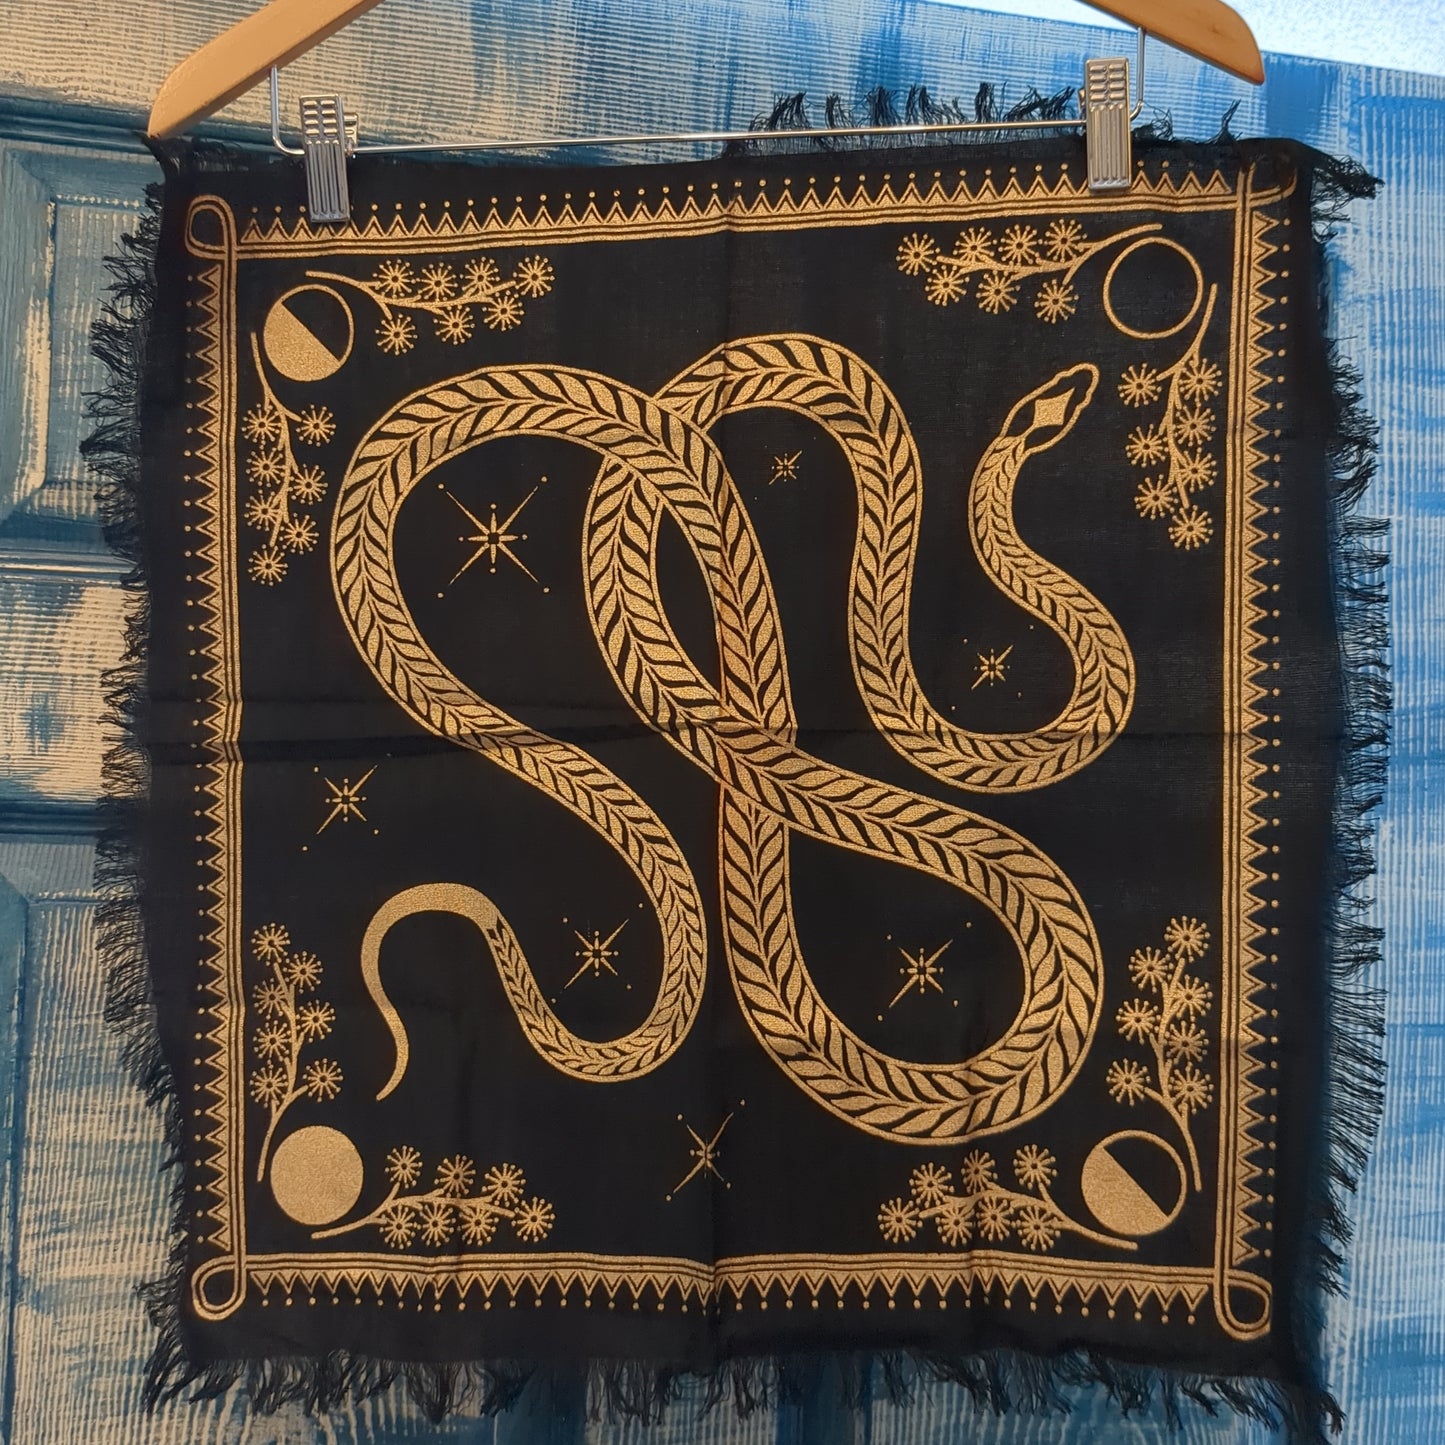 Moon Serpent altar cloth scarf